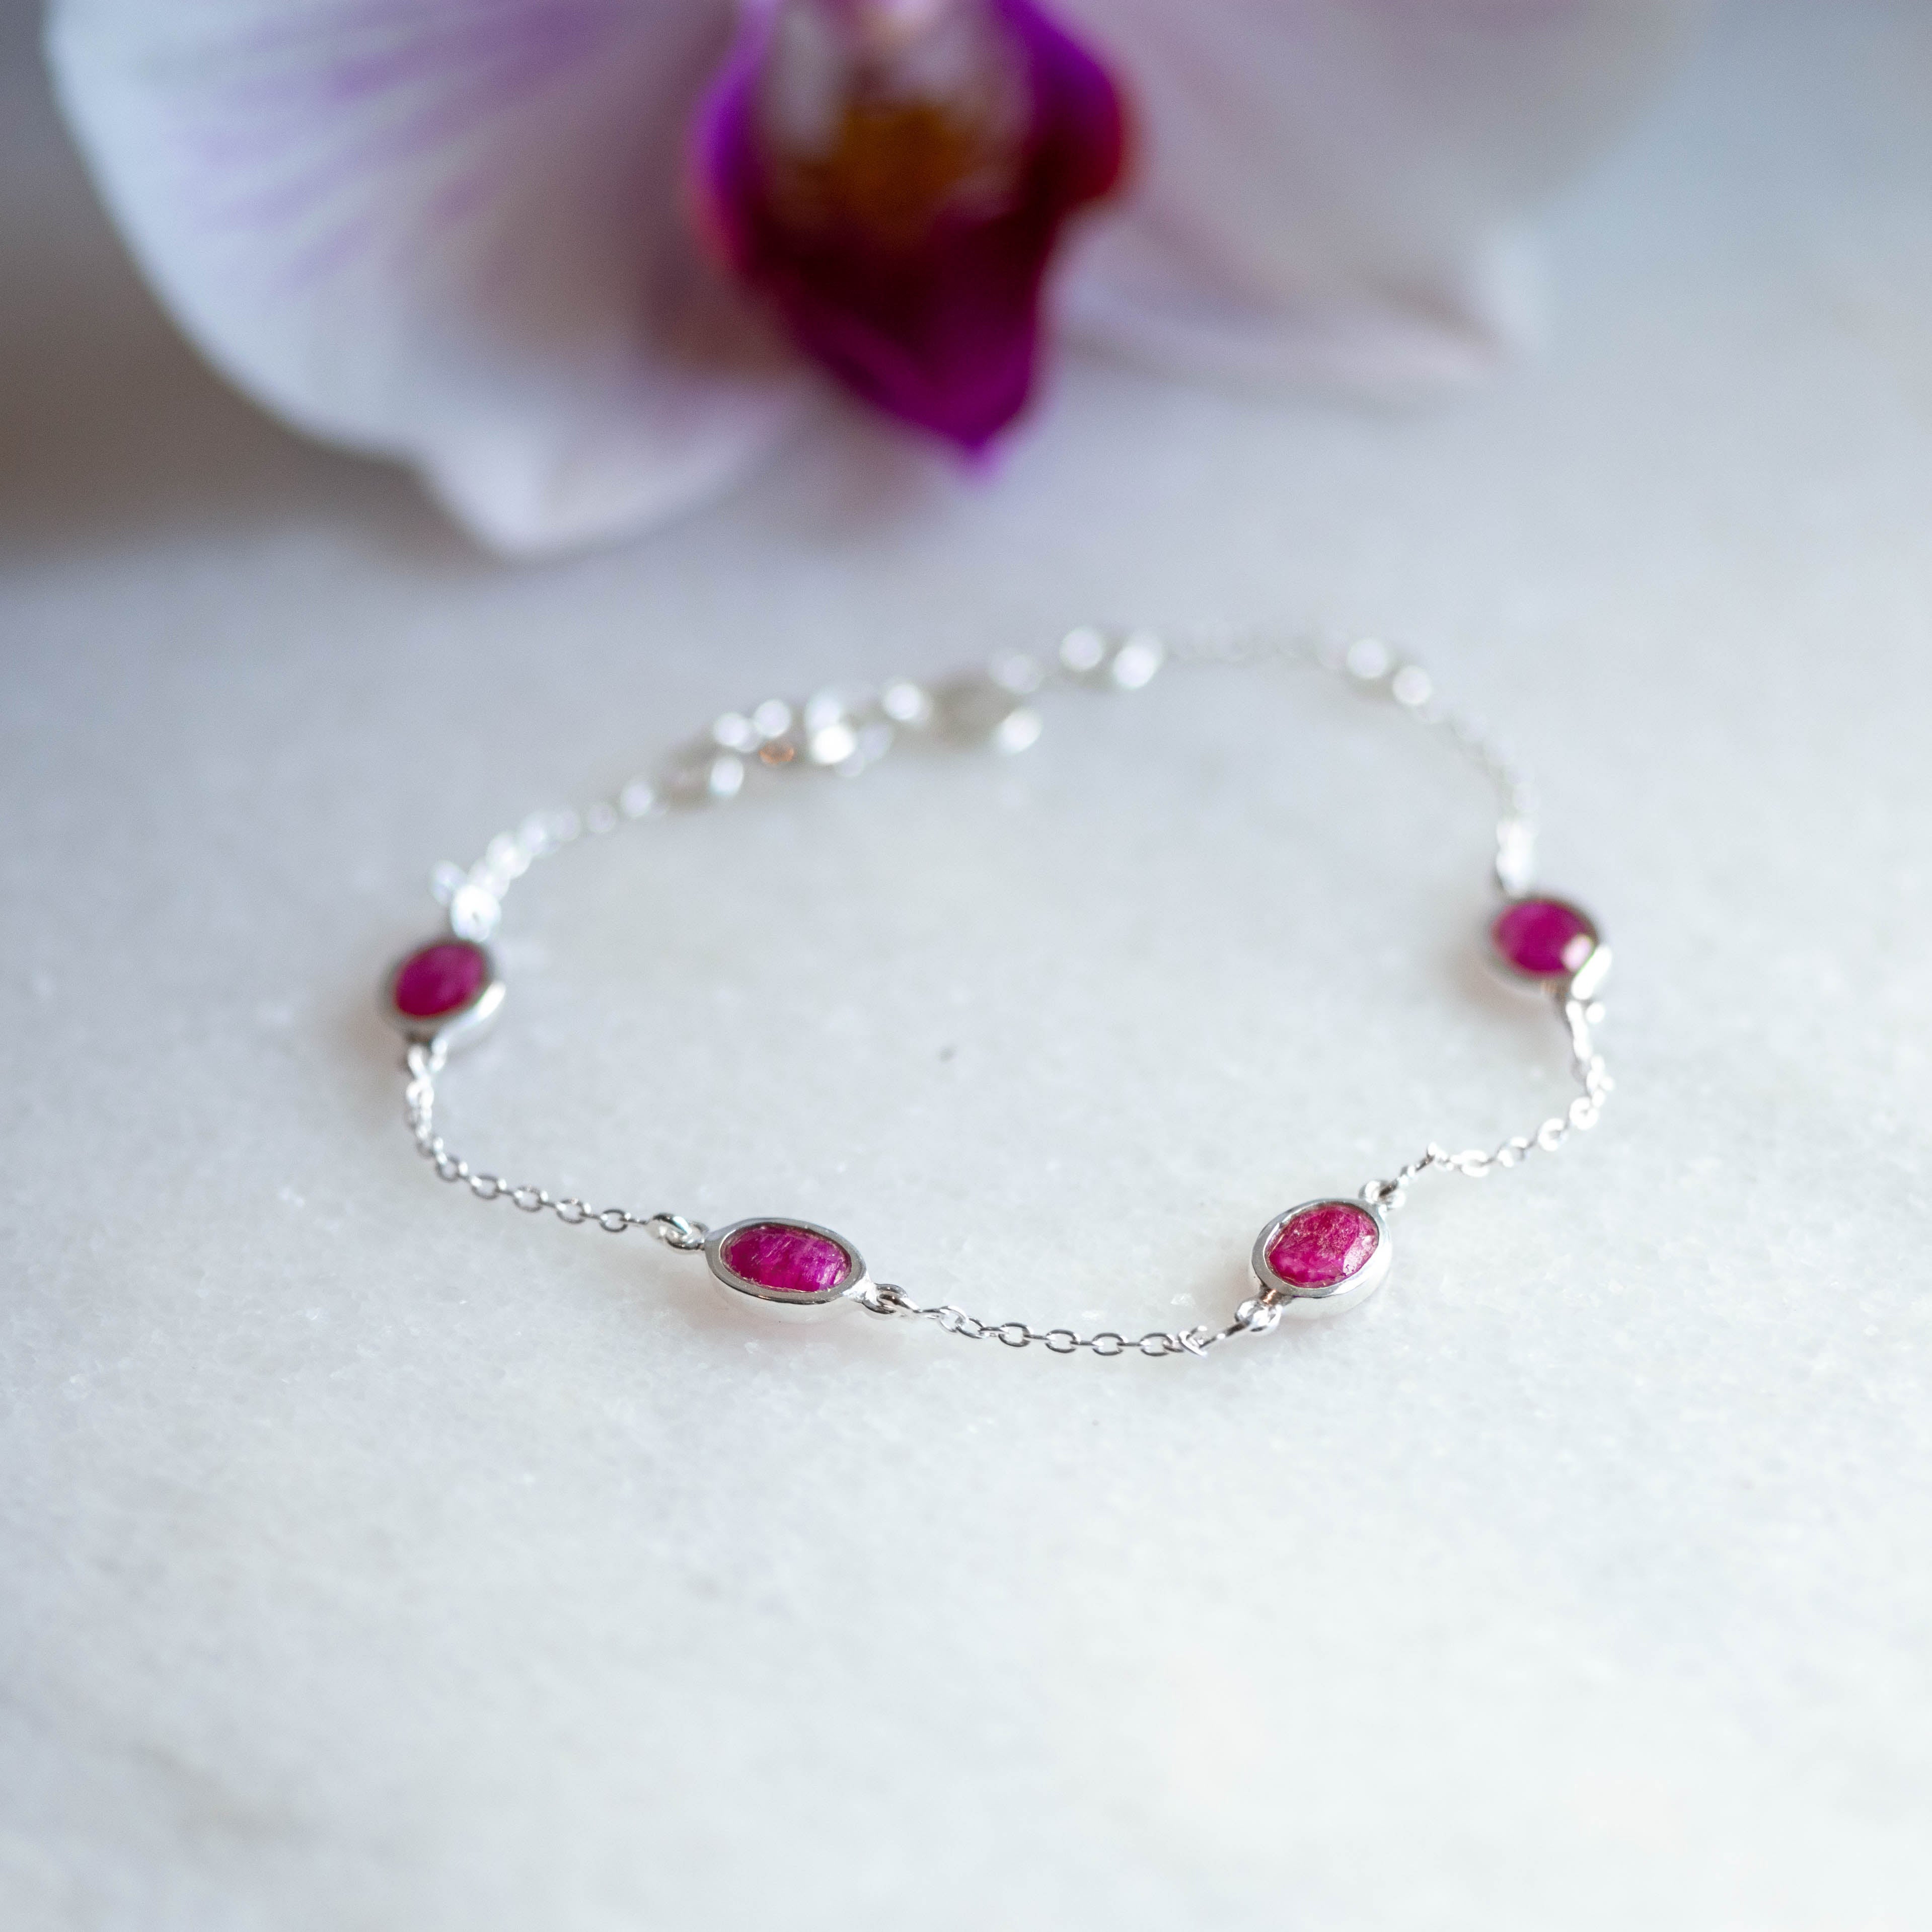 marilyn silver bracelet with ruby quartz from memara